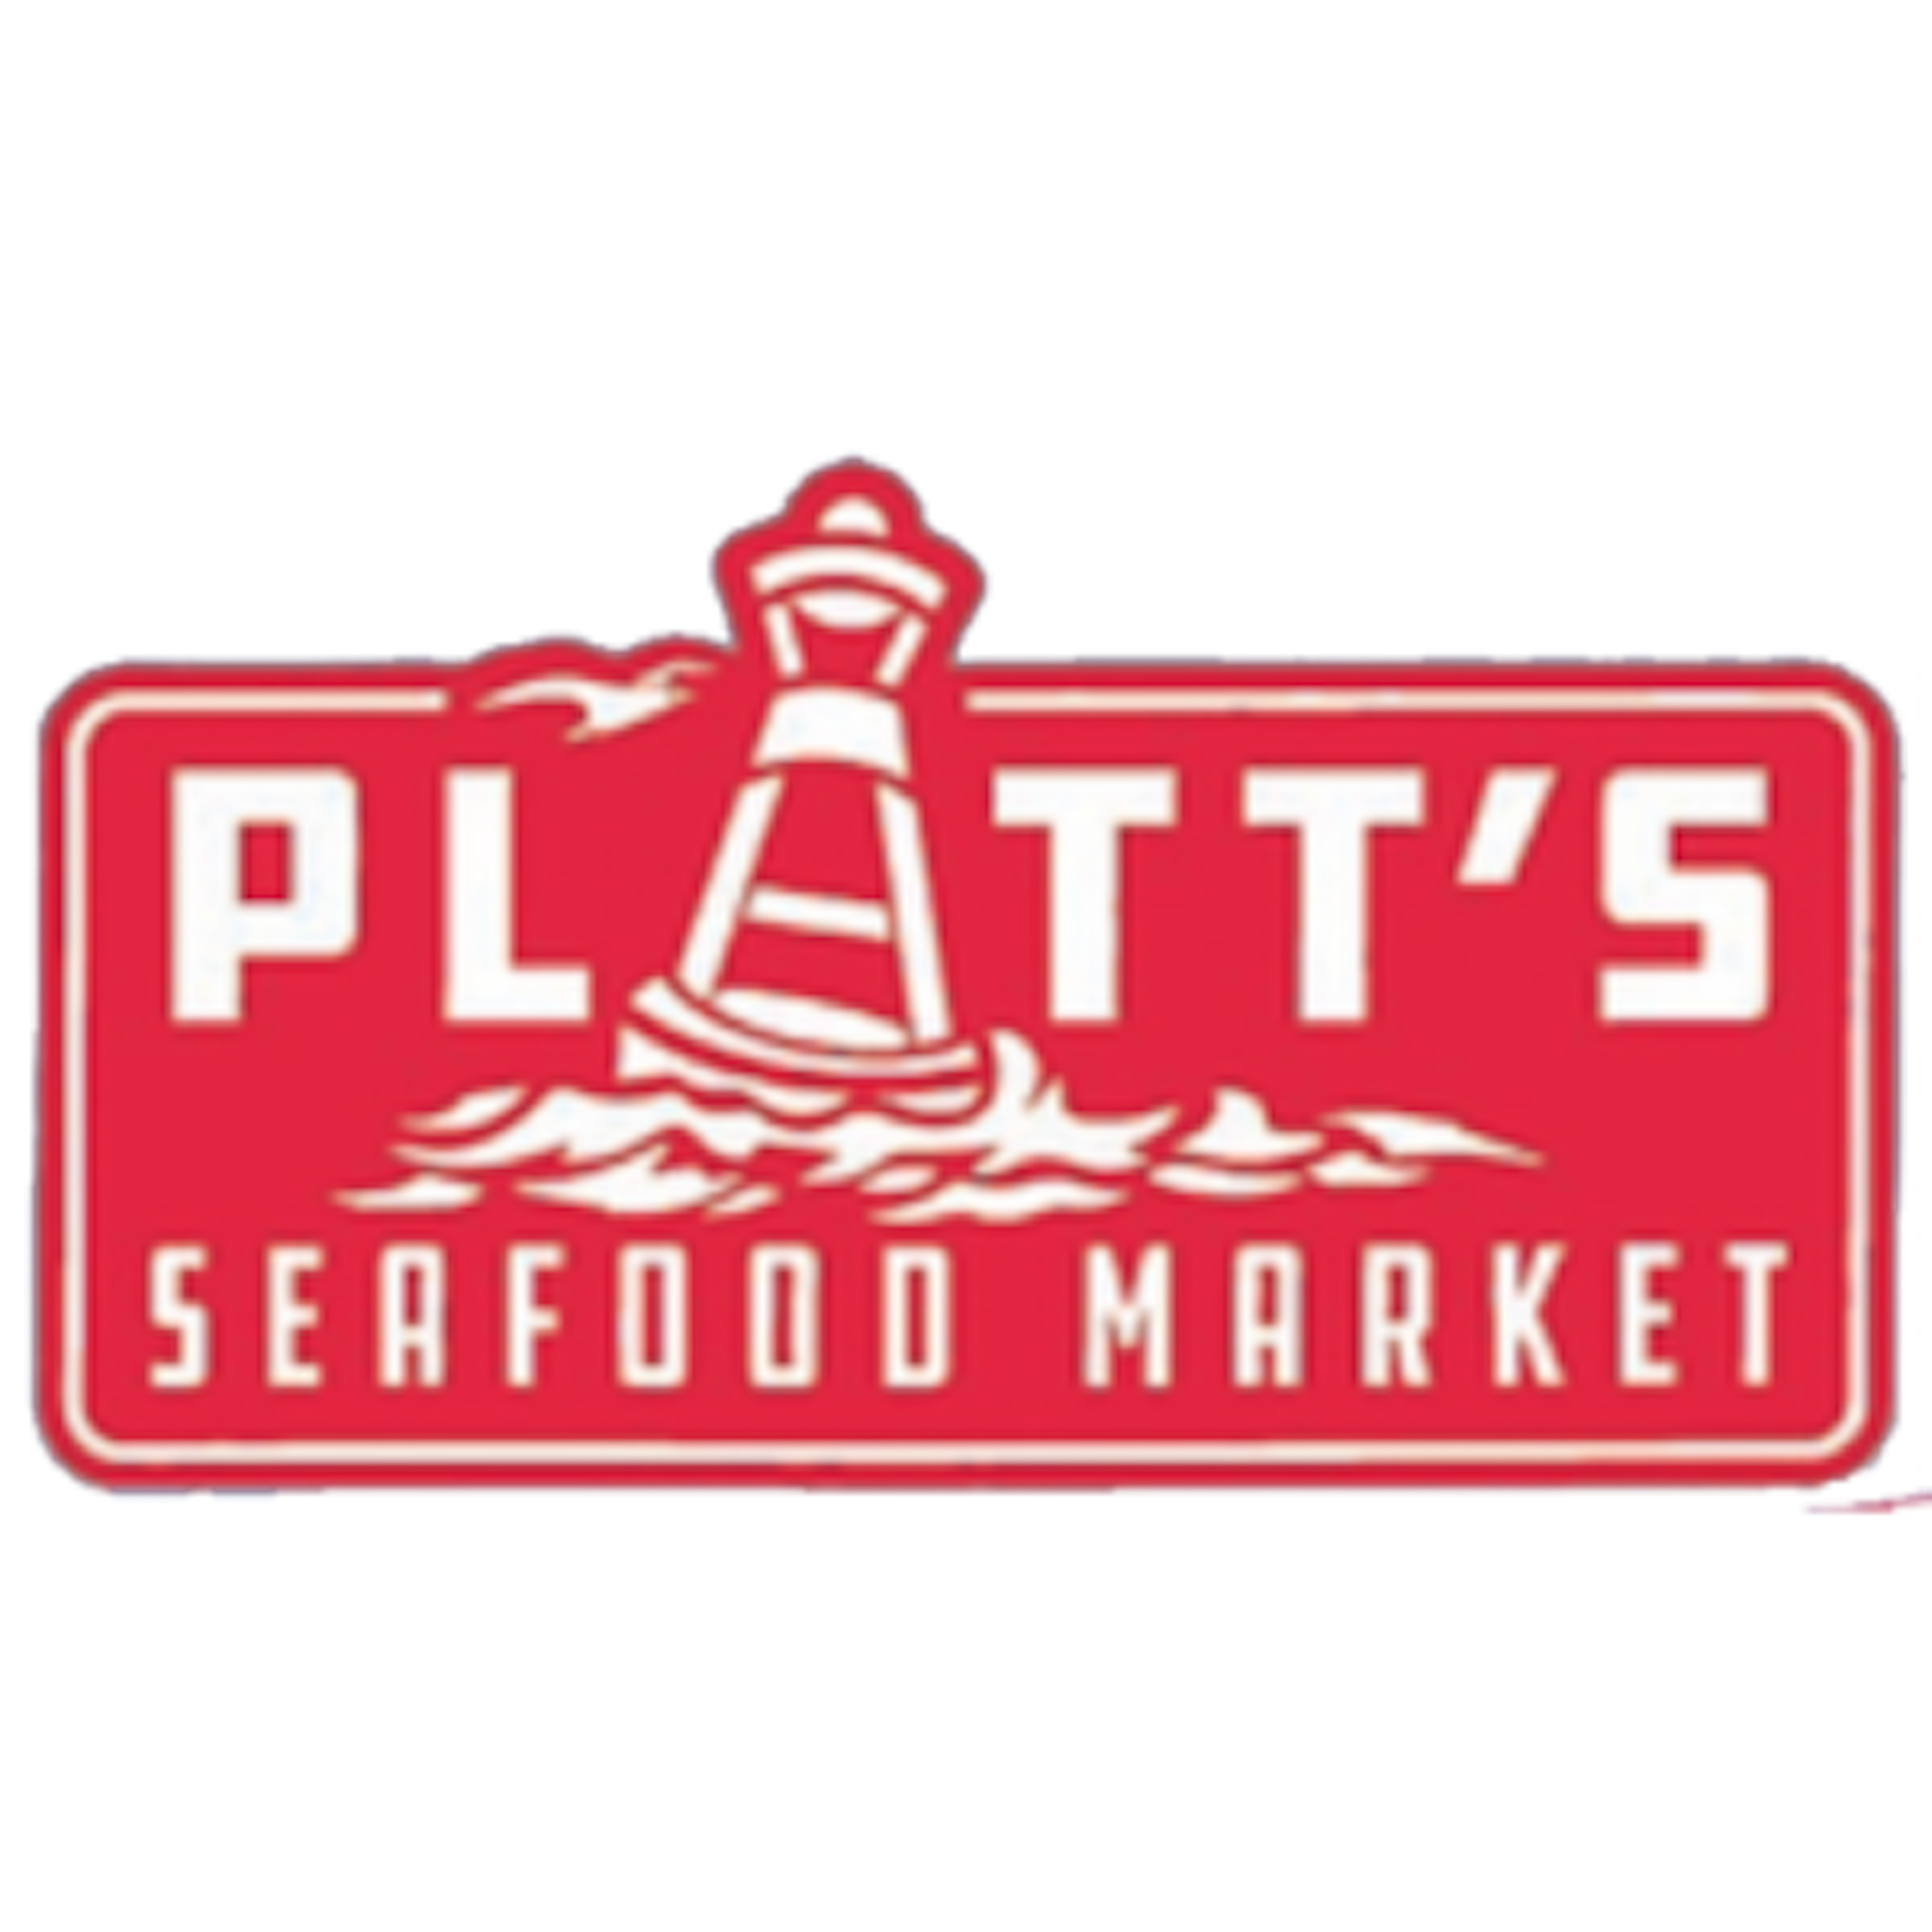 Platt’s Seafood Market